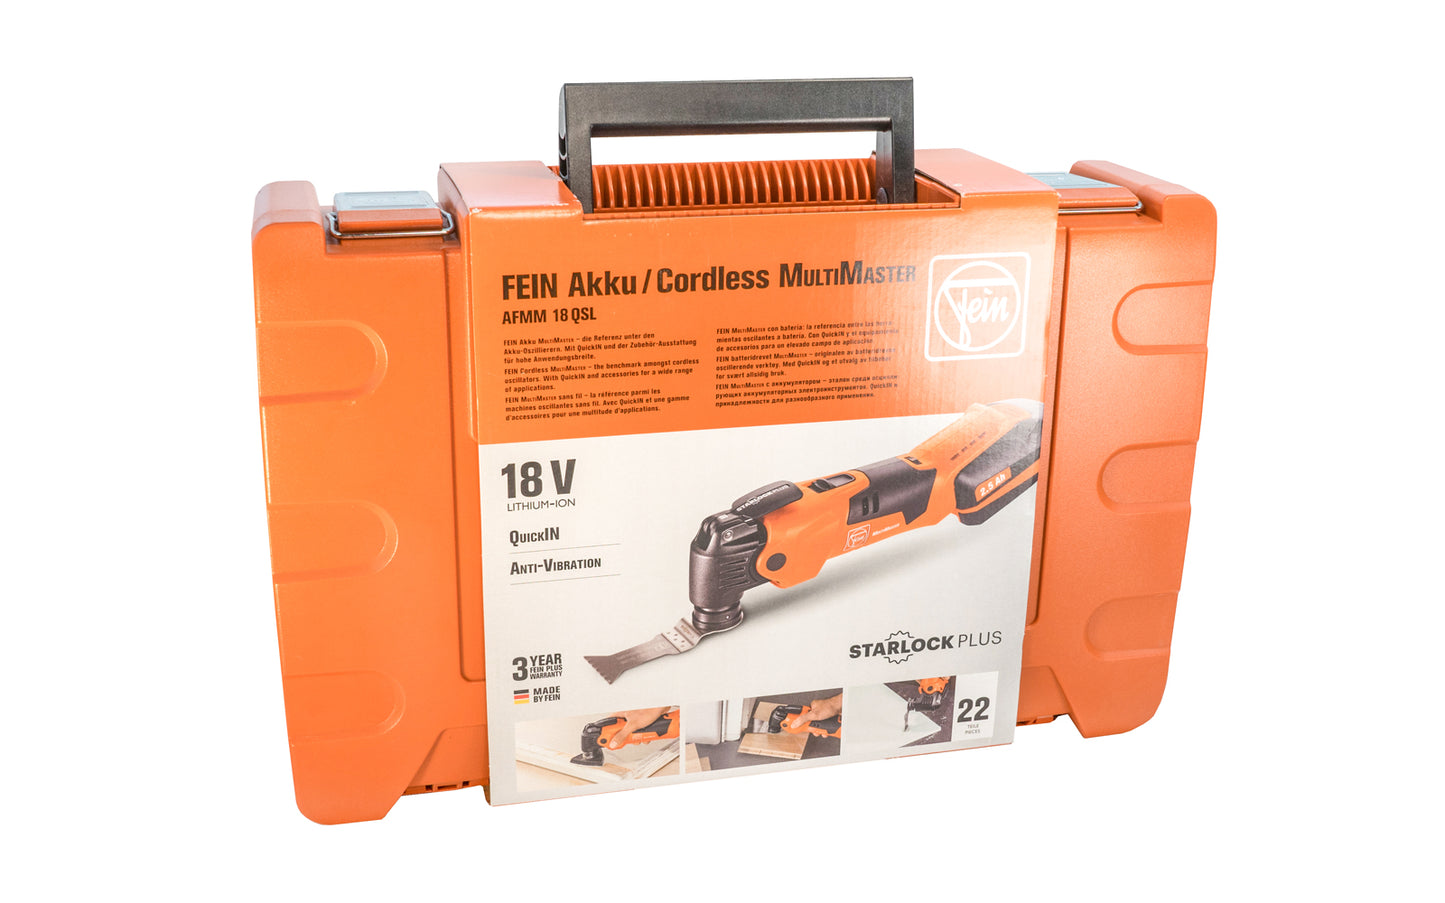 Fein Akku / Cordless MultiMaster AFMM 18QSL - 7 129 22 61 09 0